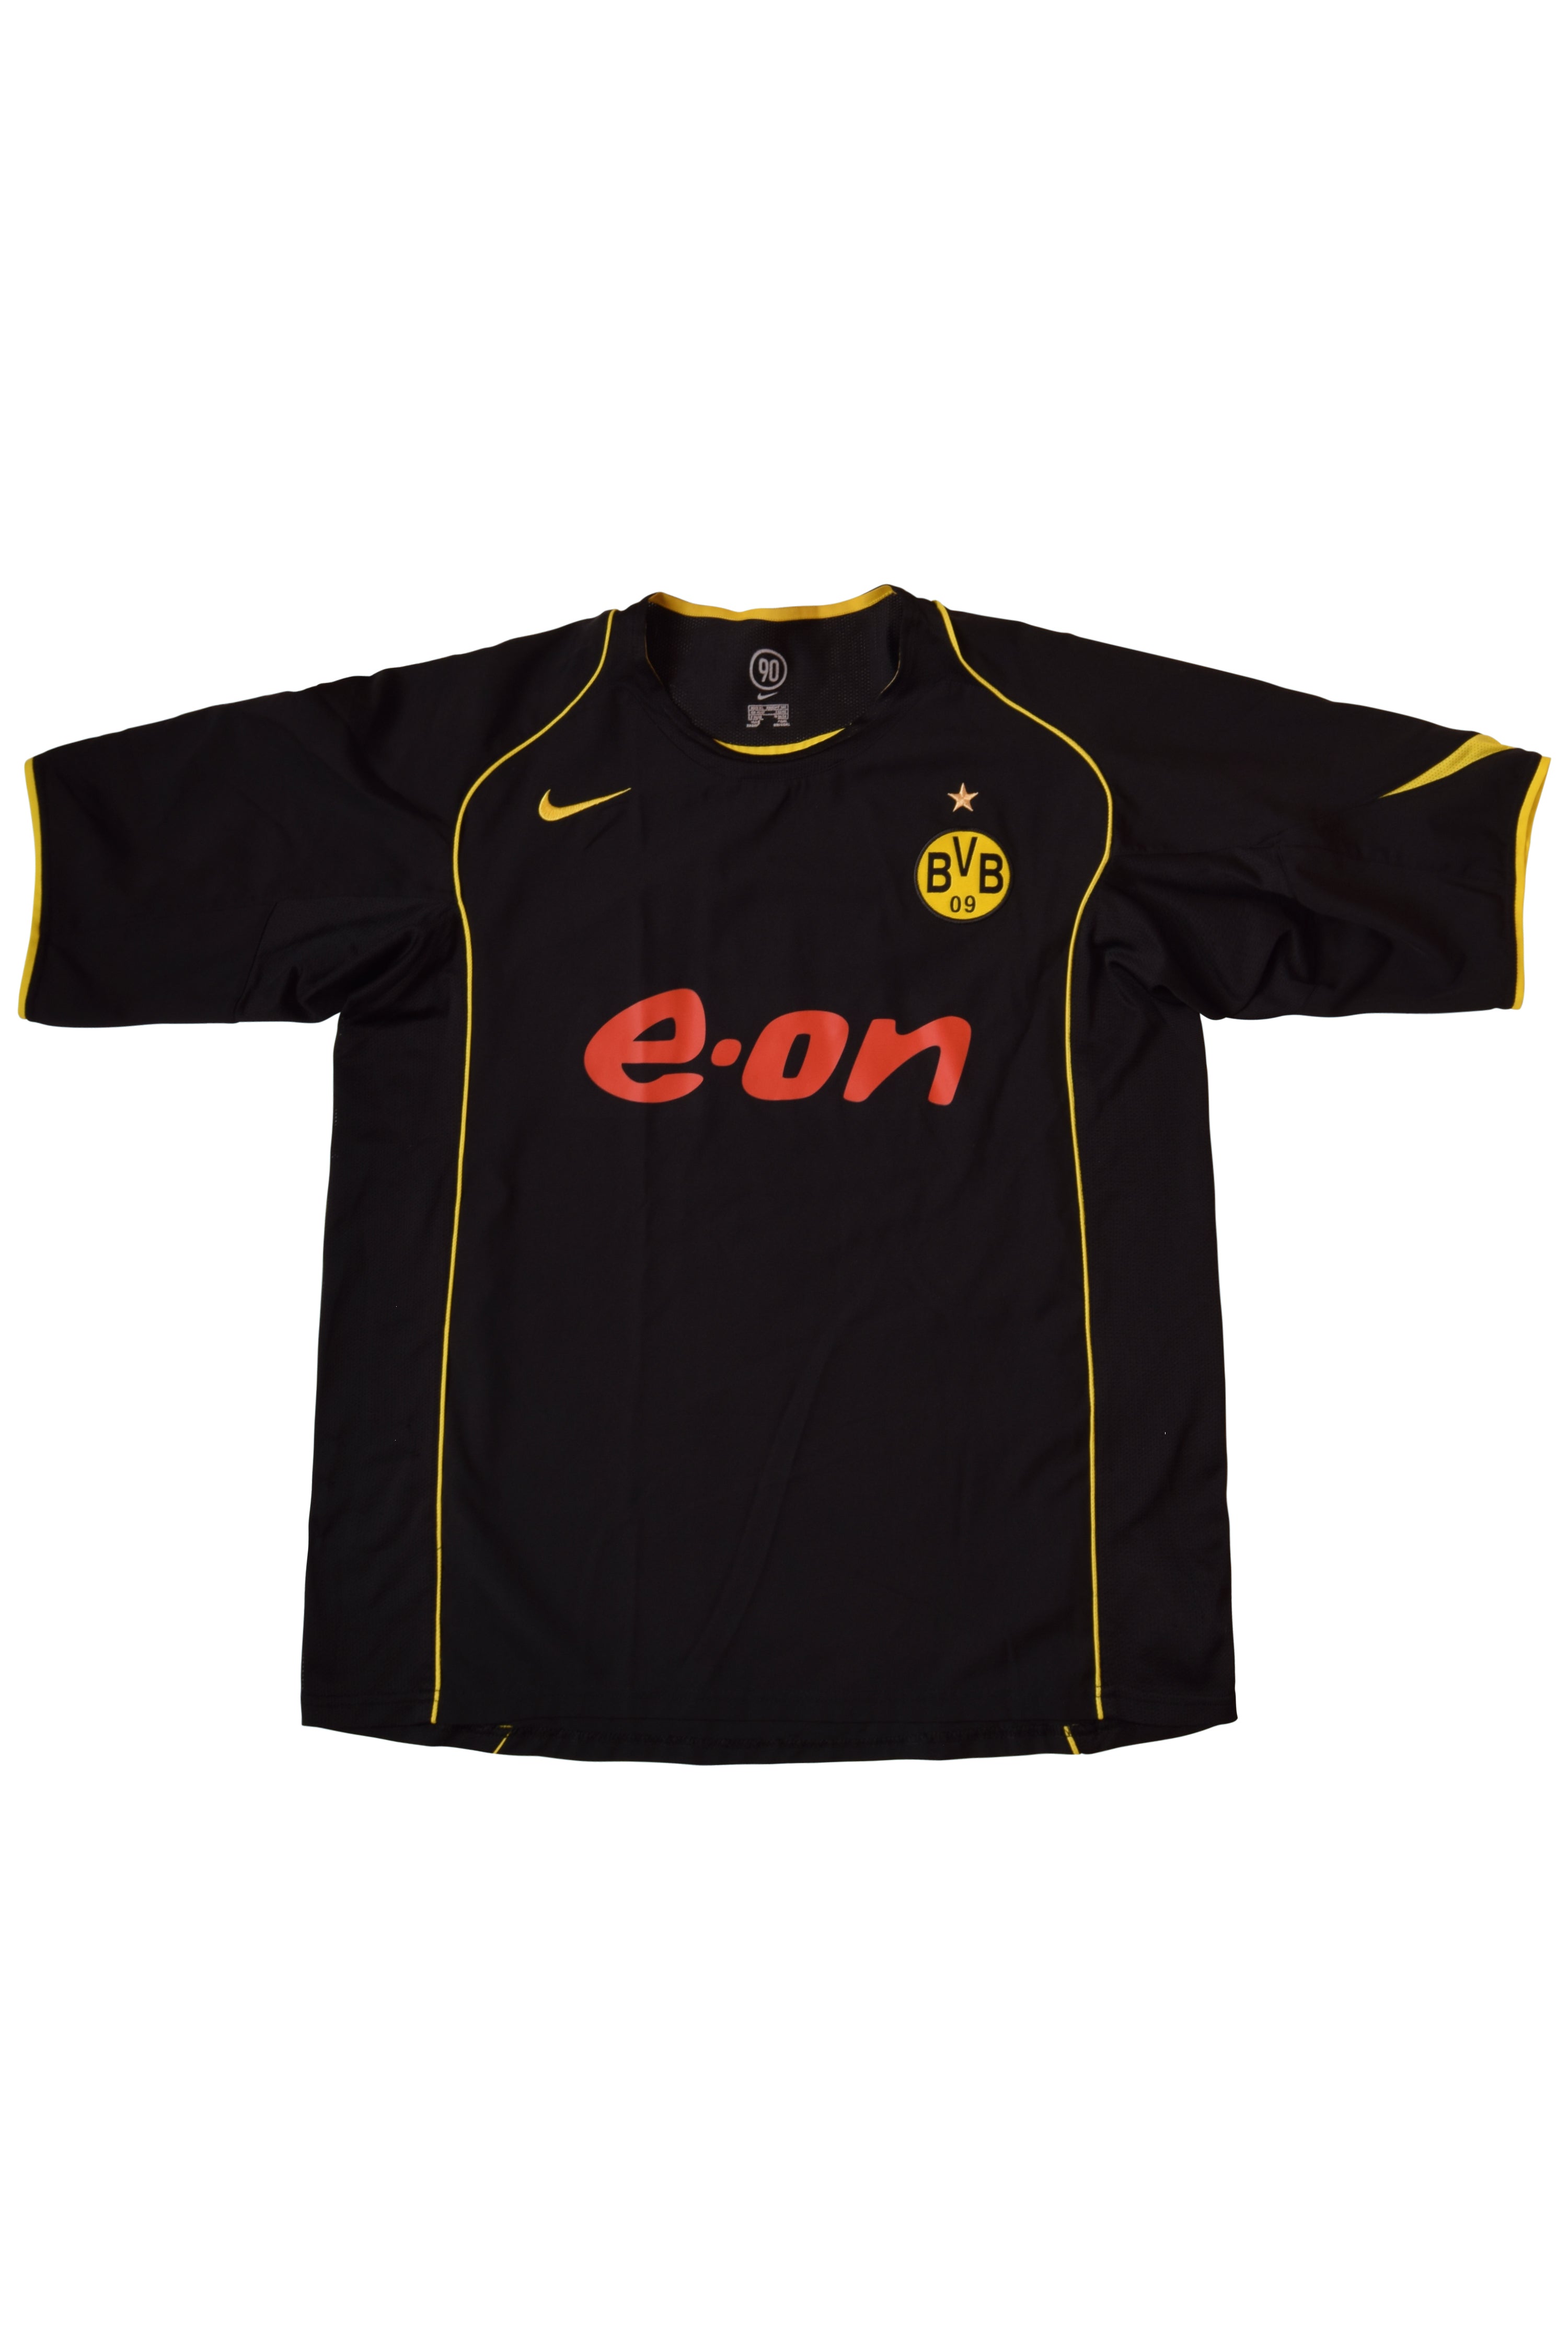 BVB Borussia Dortmund Nike Away Football Shirt '04-'05 Black Size XL E –  Greatest Hits